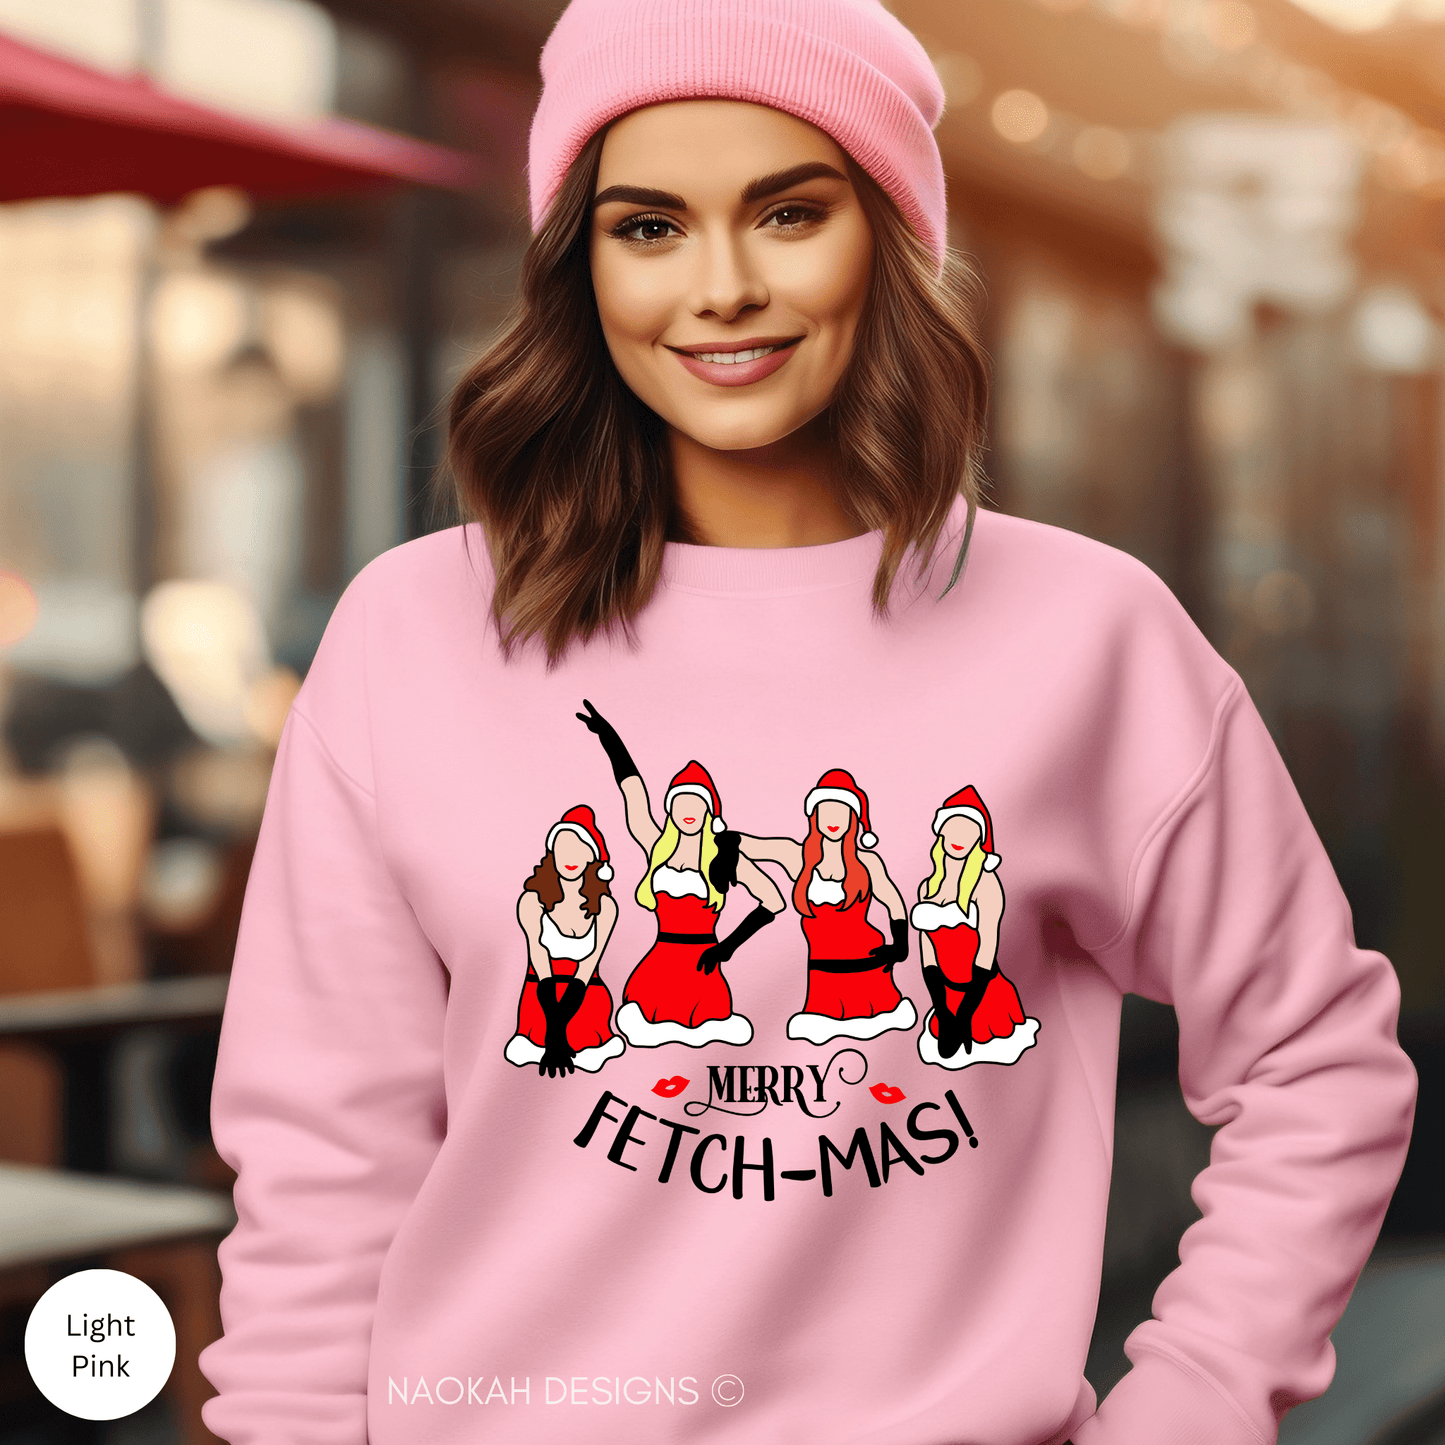 merry fetchmas sweatshirt, girls christmas sweatshirt, mean girls sweatshirt, merry christmas sweatshirt,women's christmas sweatshirt